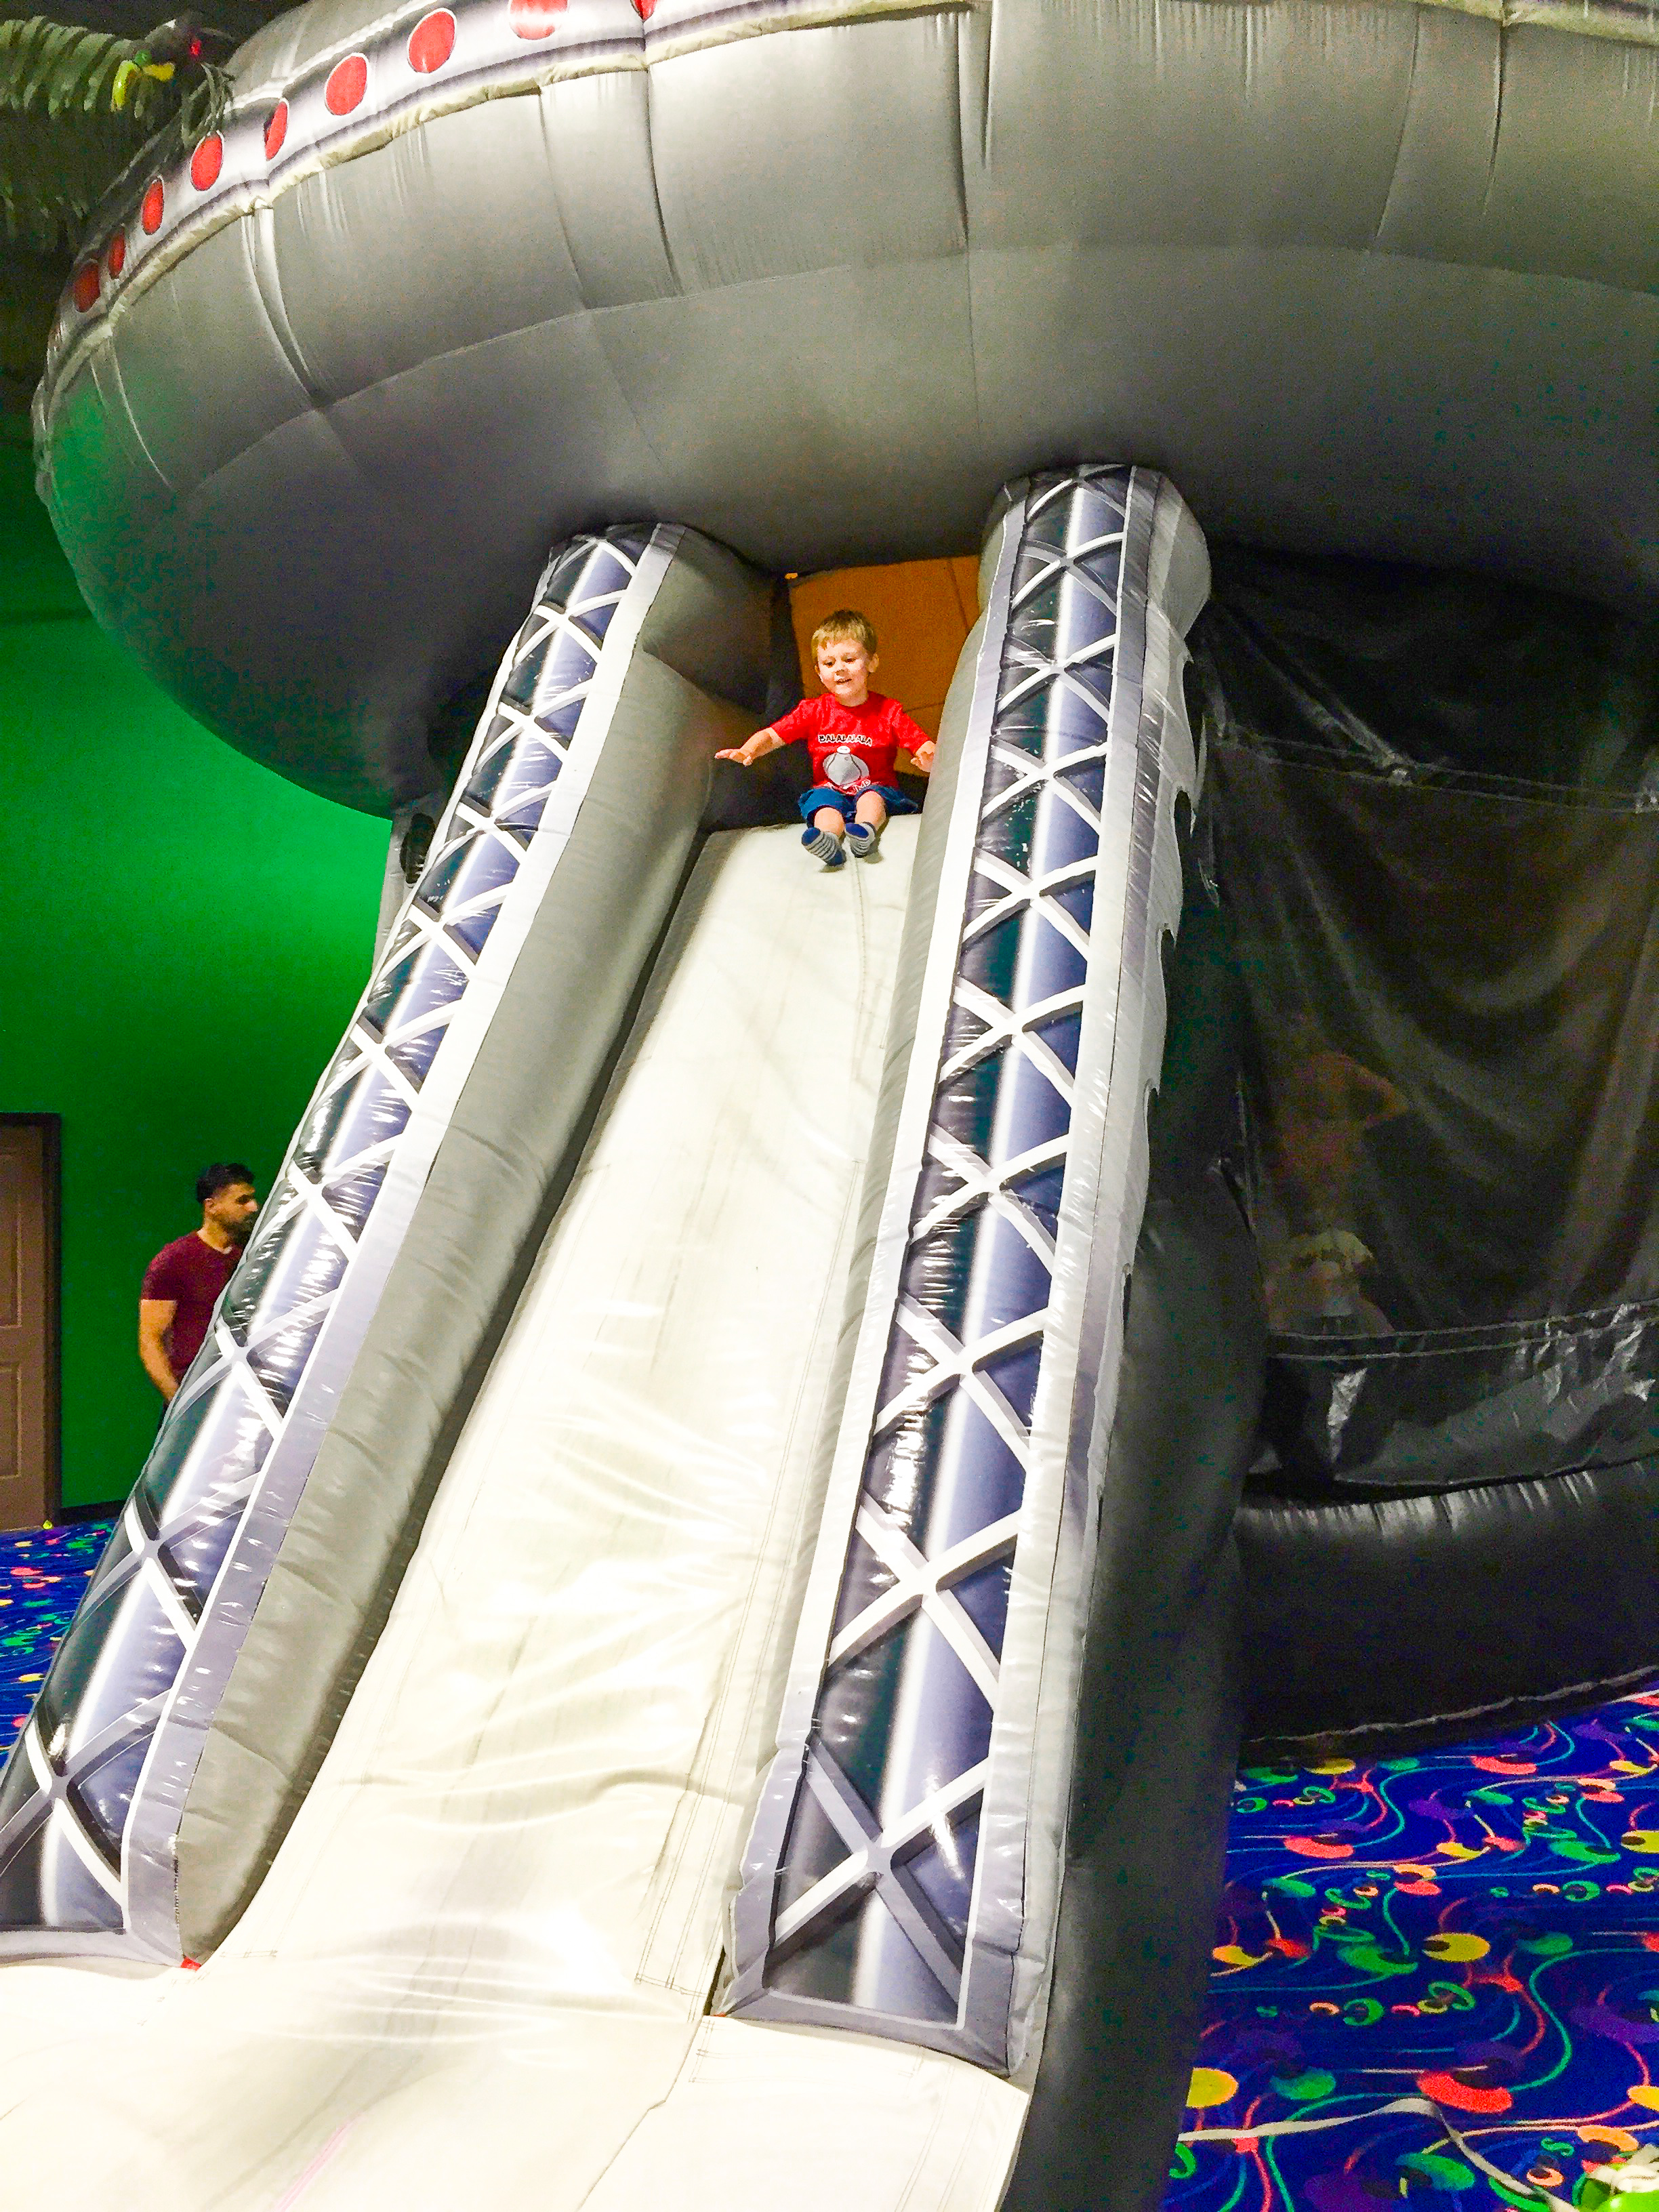 Boy on a big spaceship bouncy slide. 